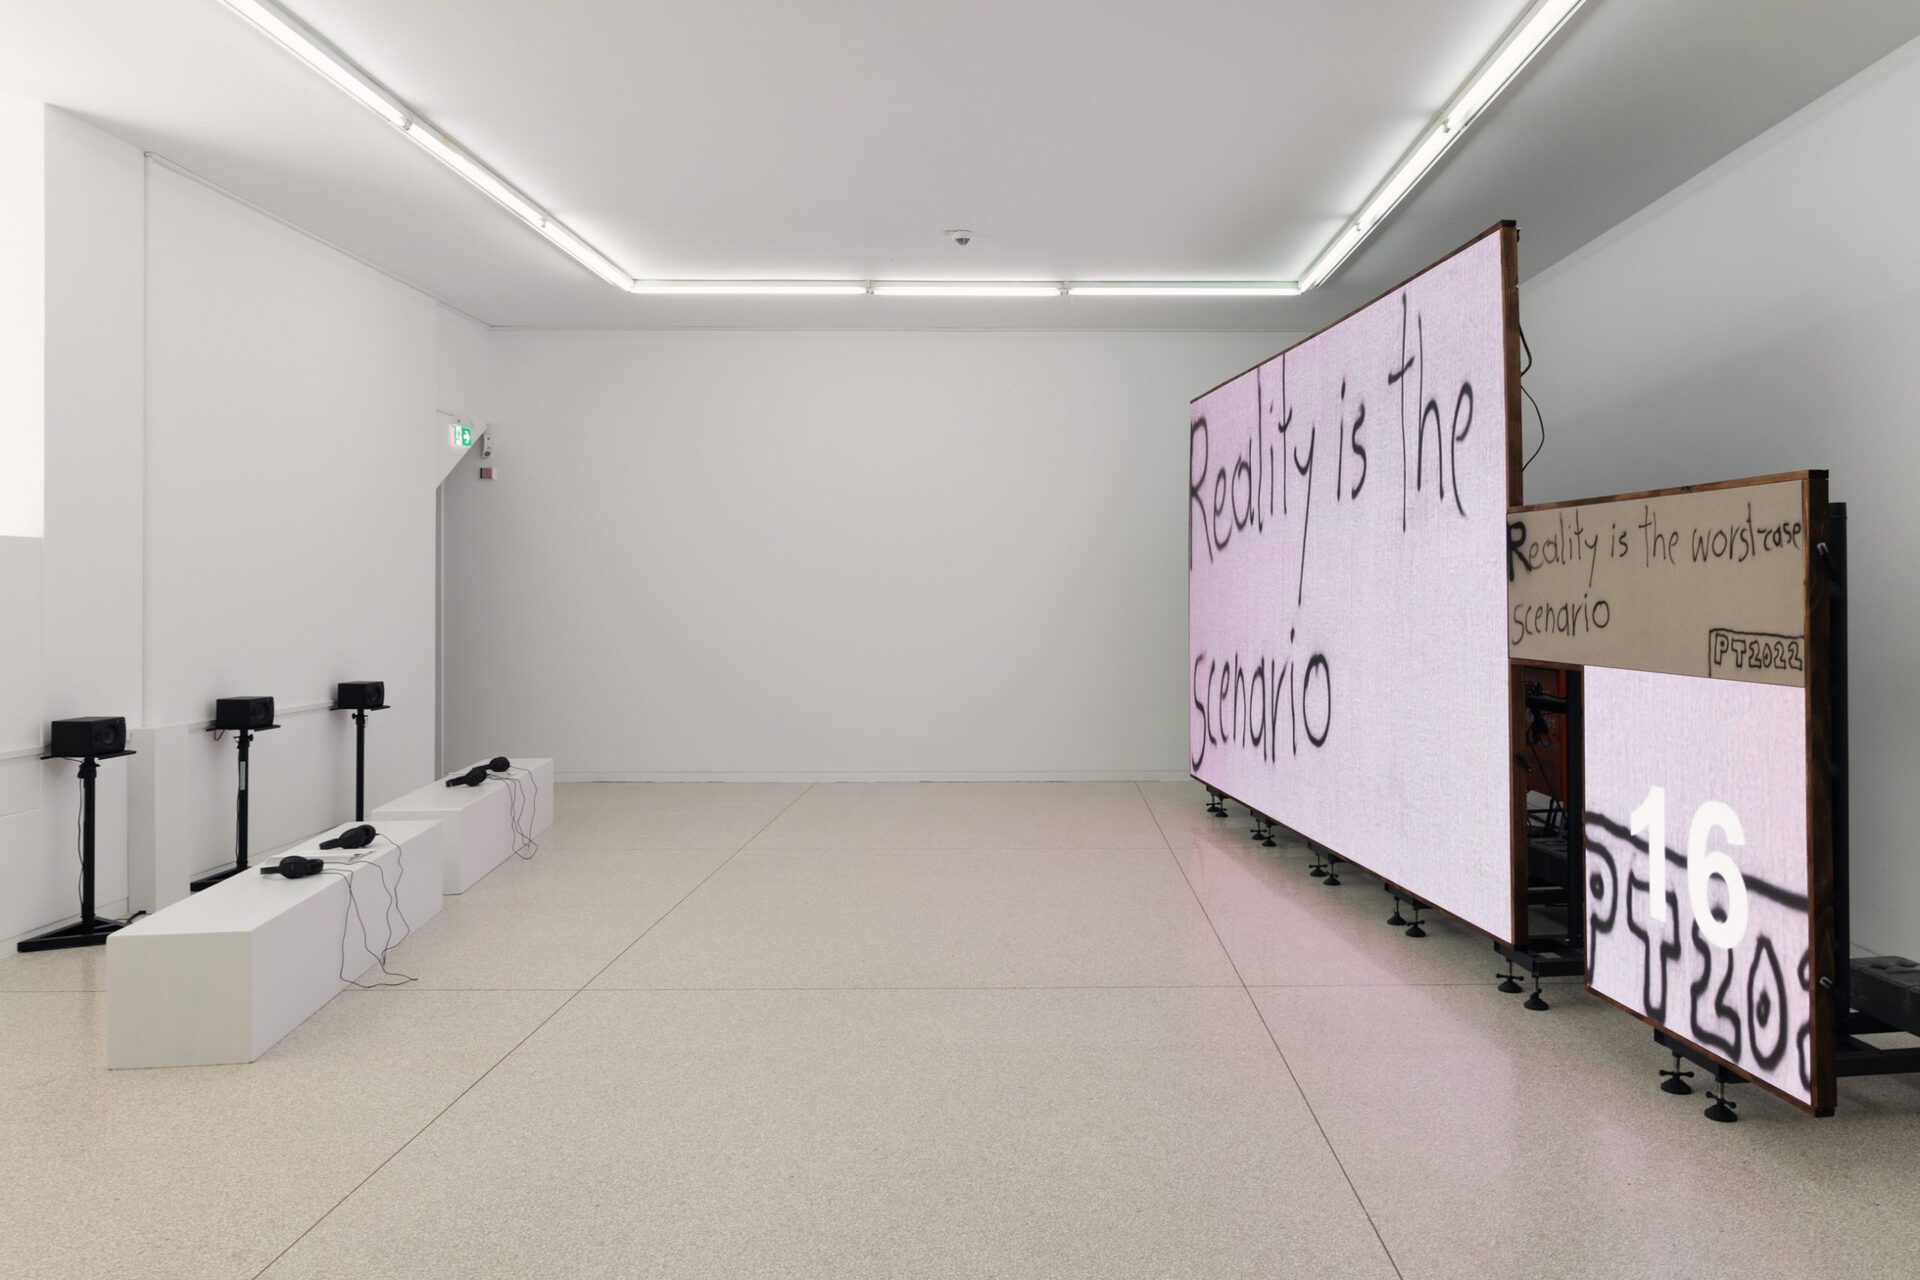 Philipp Timischl, “Reality is the worst-case scenario”, Exhibition at Heidelberger Kunstverein, June 12–August 28, 2022, Installation shots by Lys Y. Seng